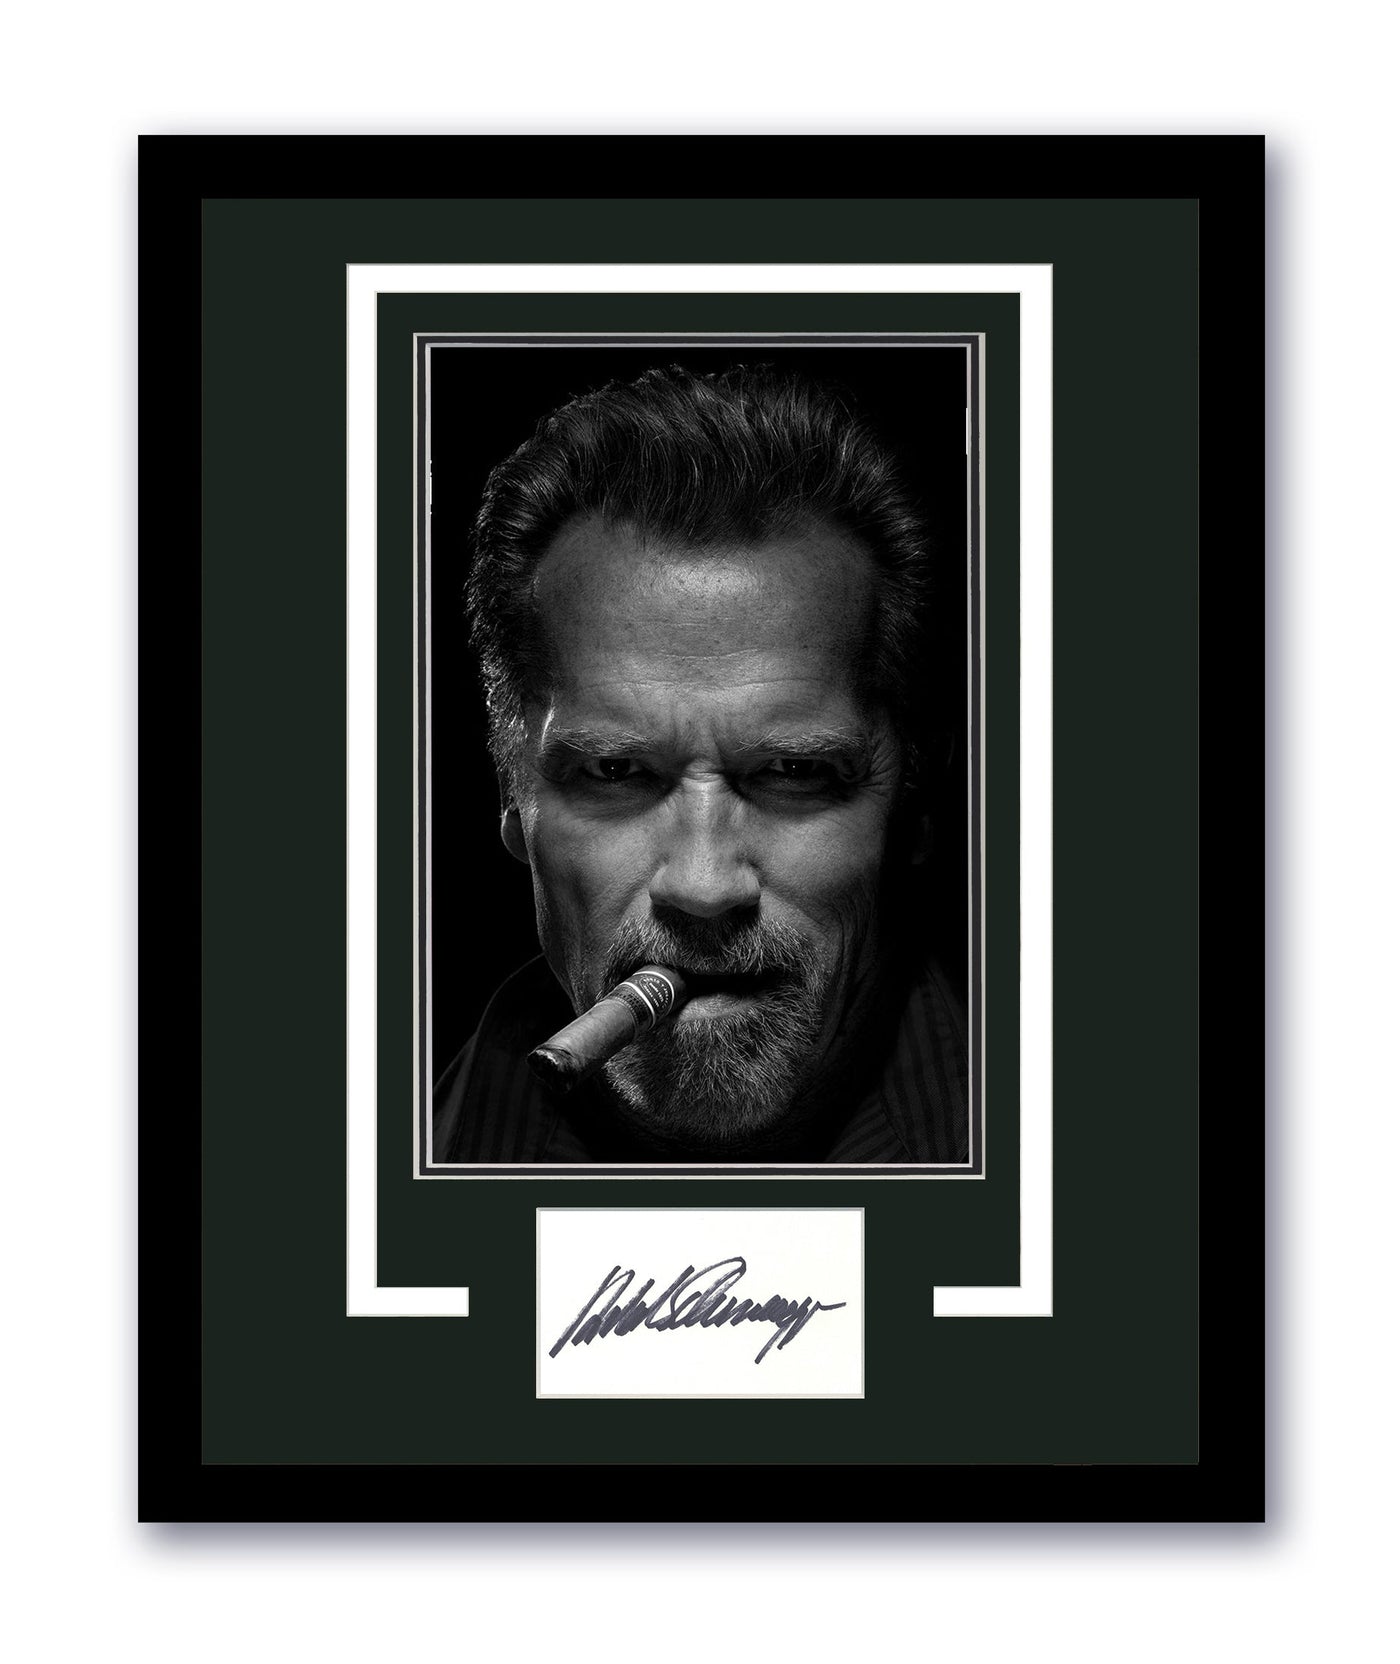 Arnold Schwarzenegger Signed Cut 11x14 Framed Cigar Autographed ACOA